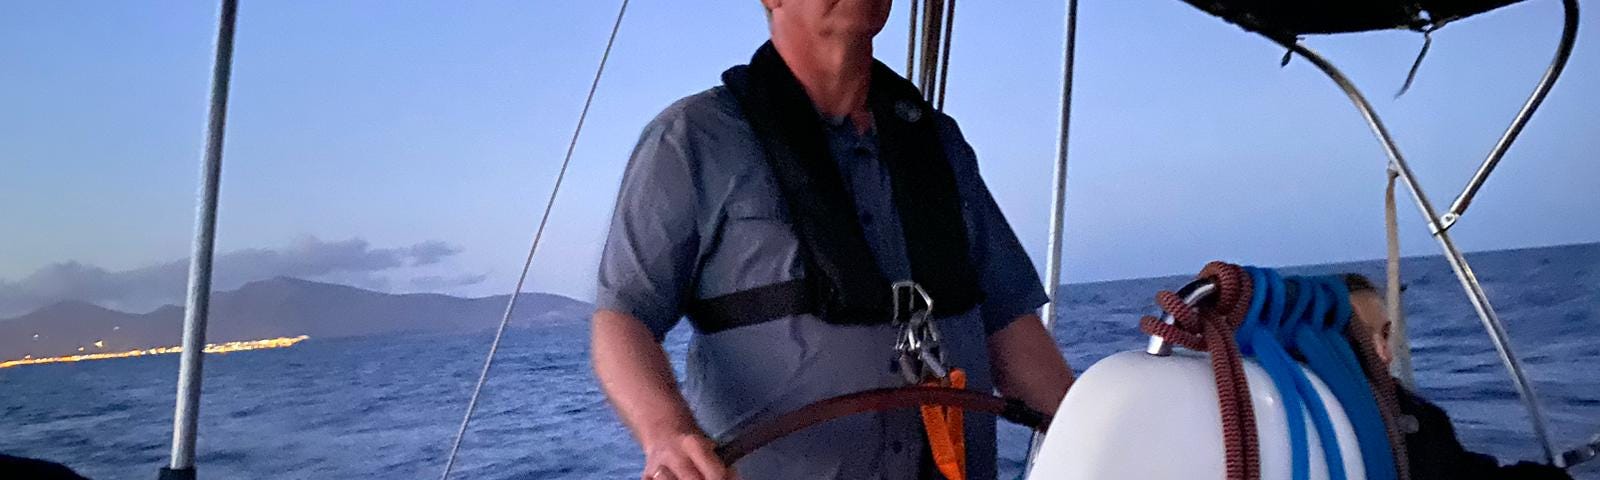 A skipper on a sailing boat